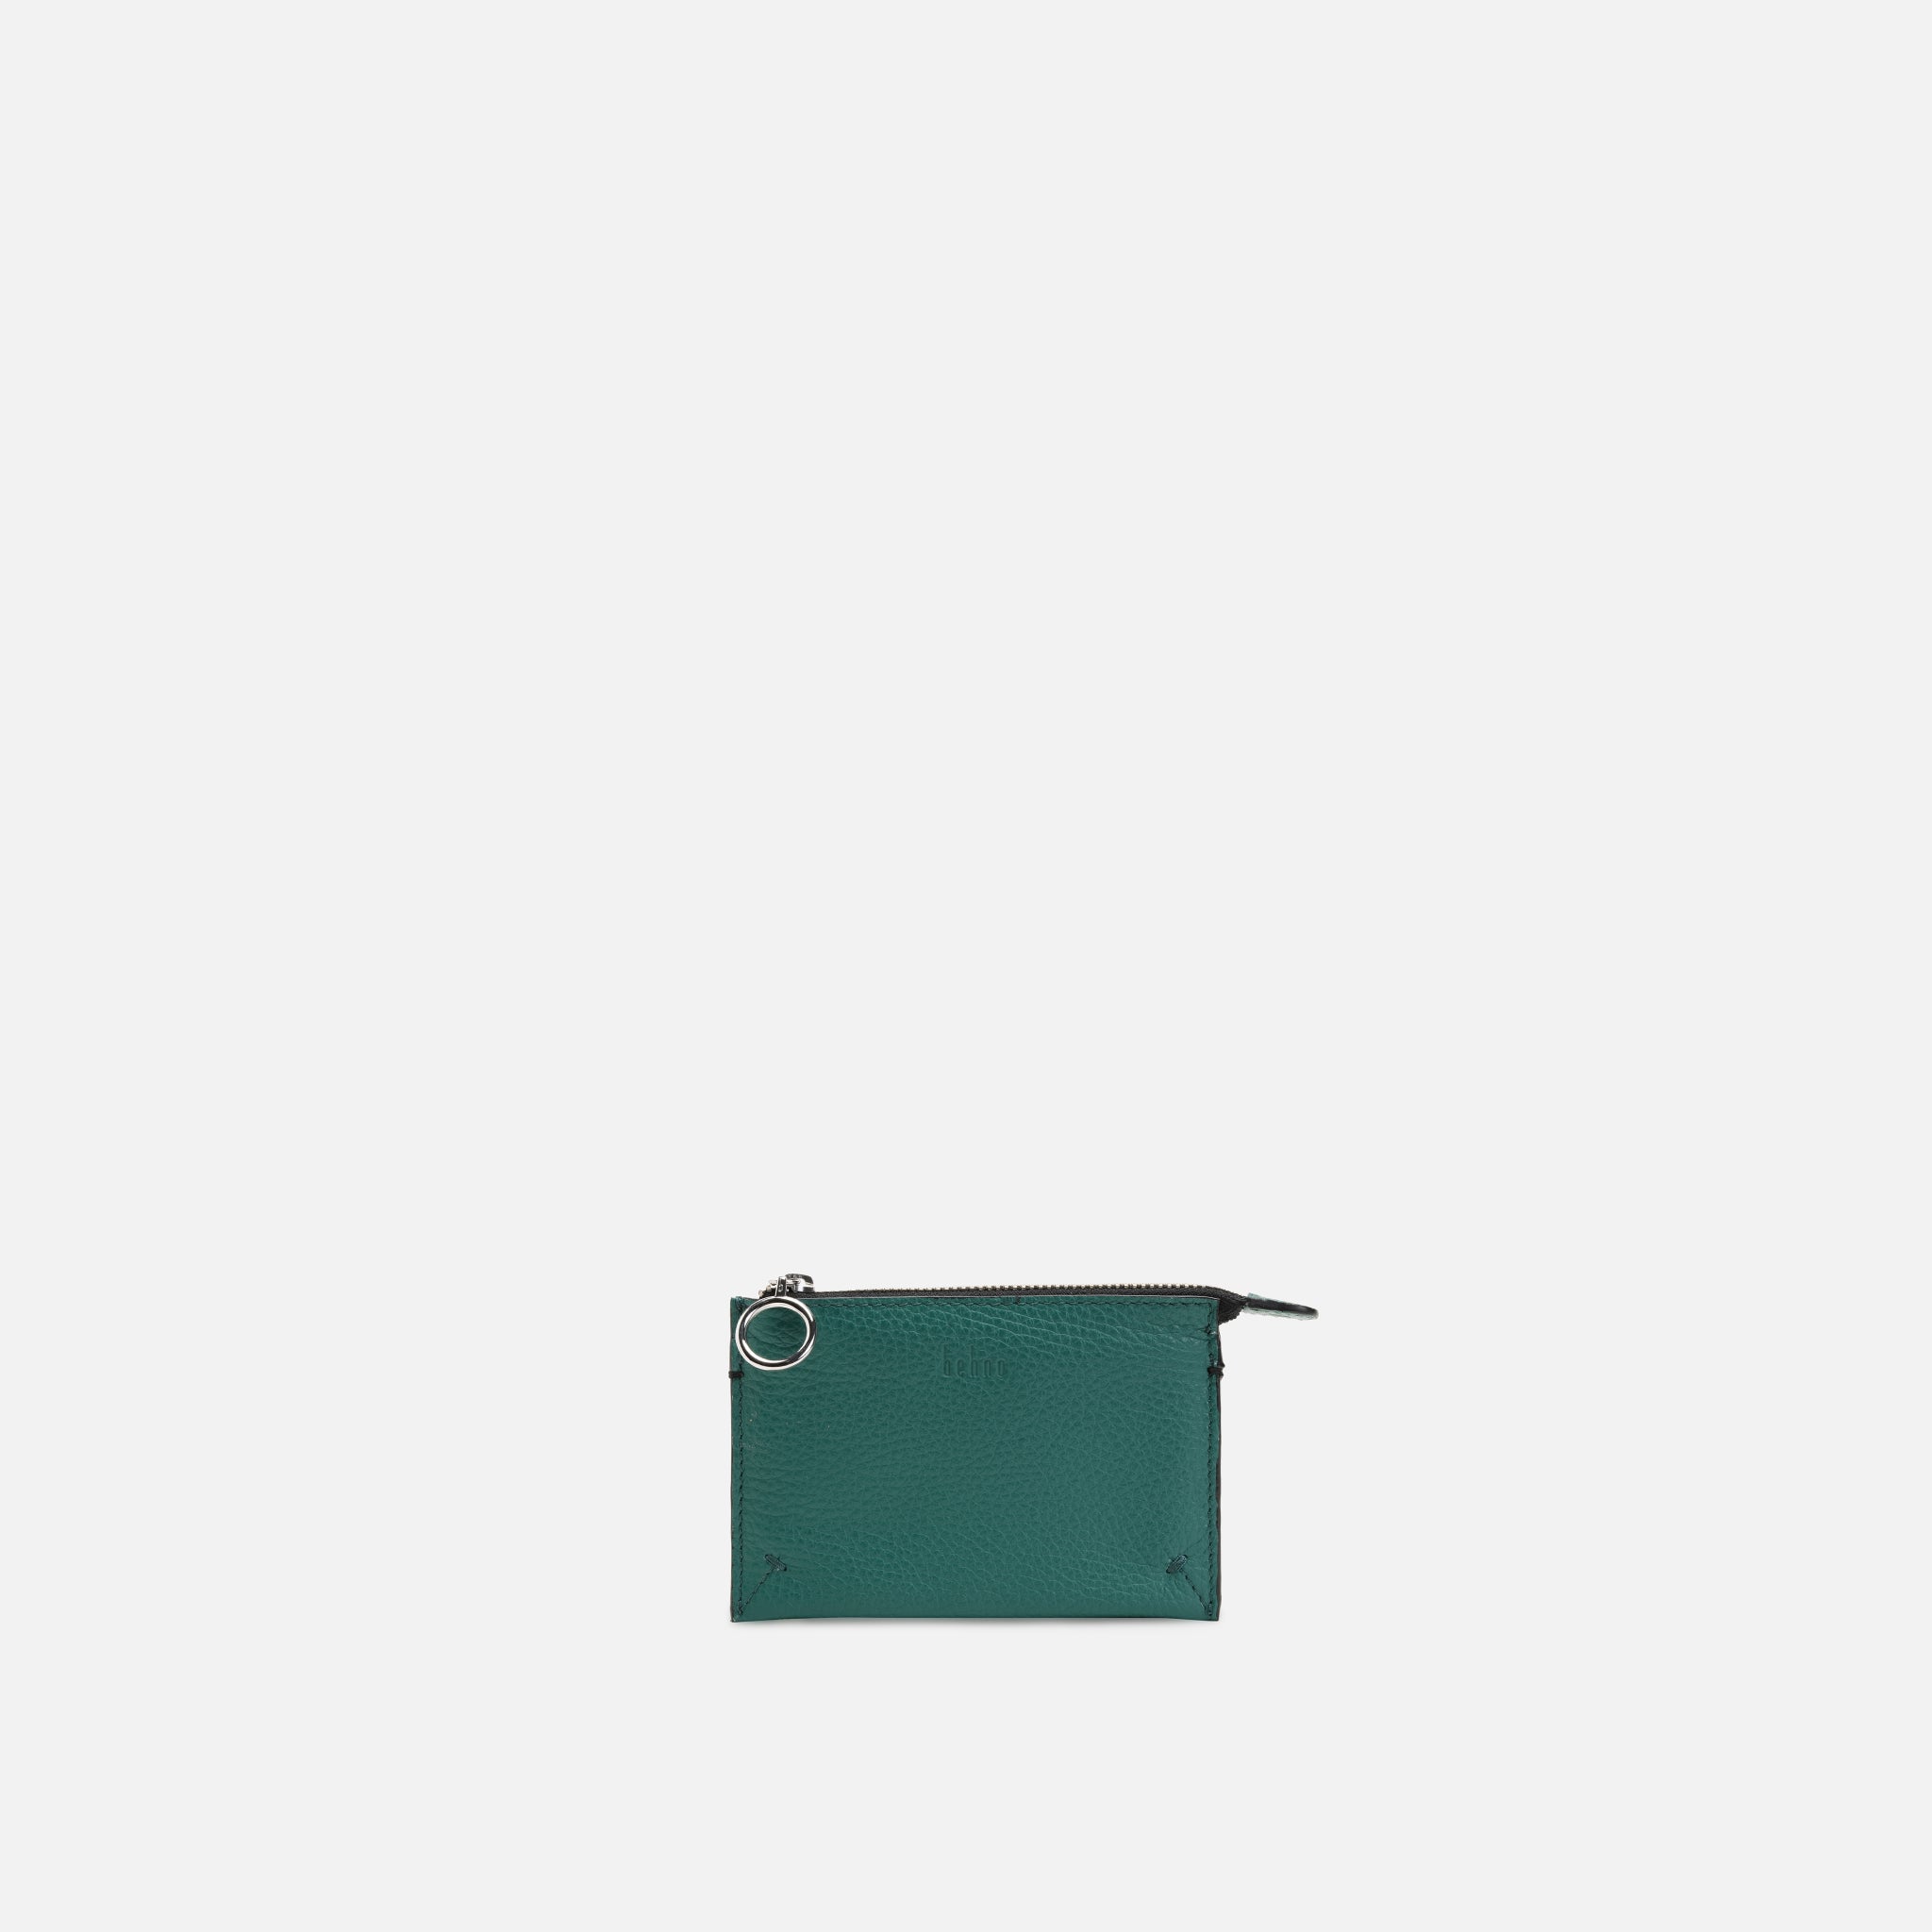 CLN - The Moral Monogram sling bag in three colorways.